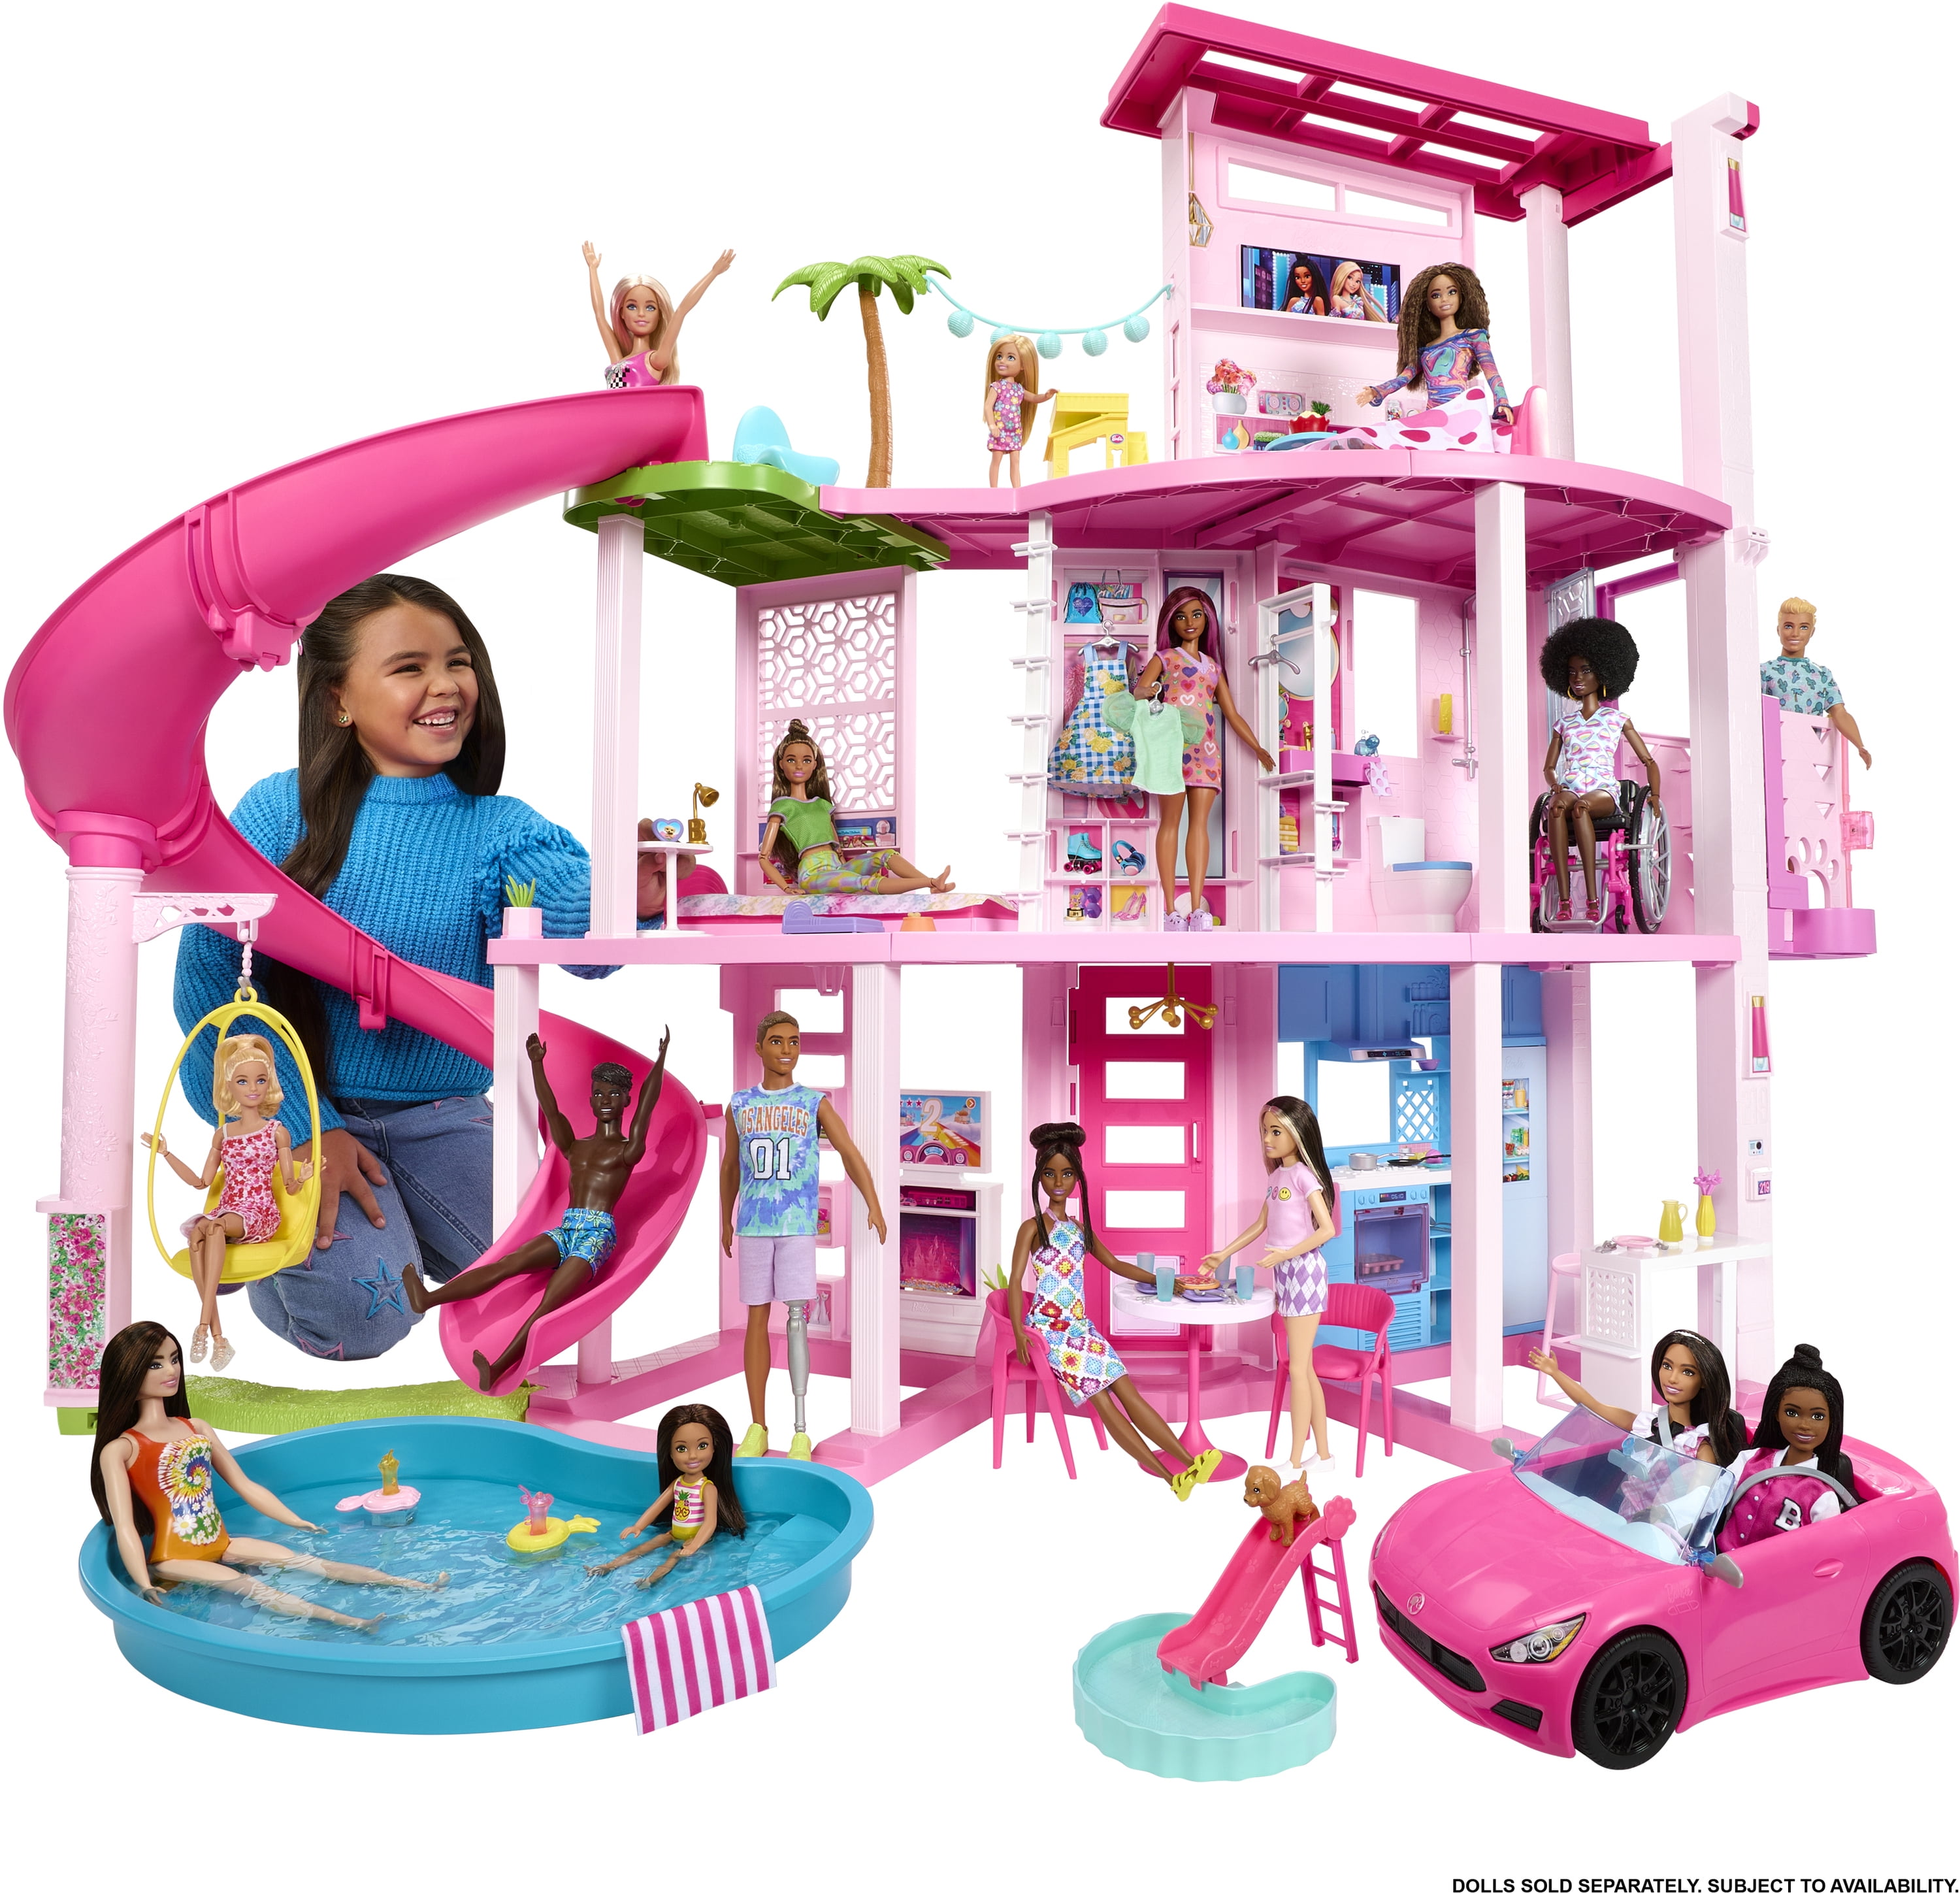 Barbie Dollhouse Collection - My Full Barbie Dreamhouse Toys